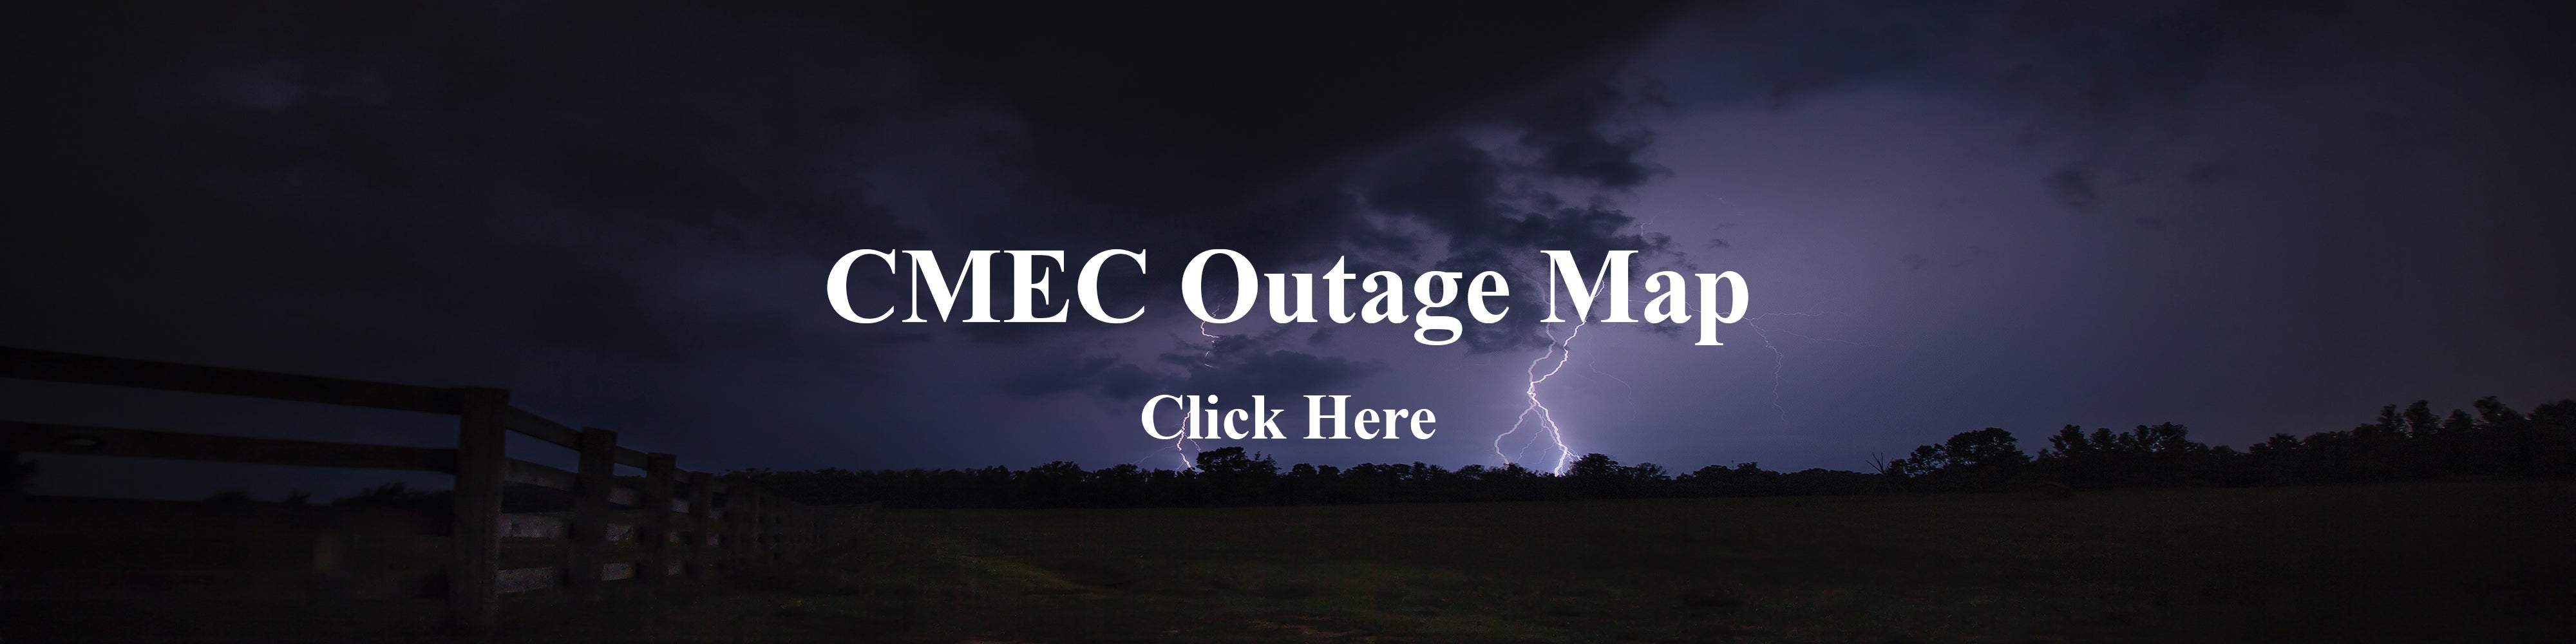 CMEC Outage Map 